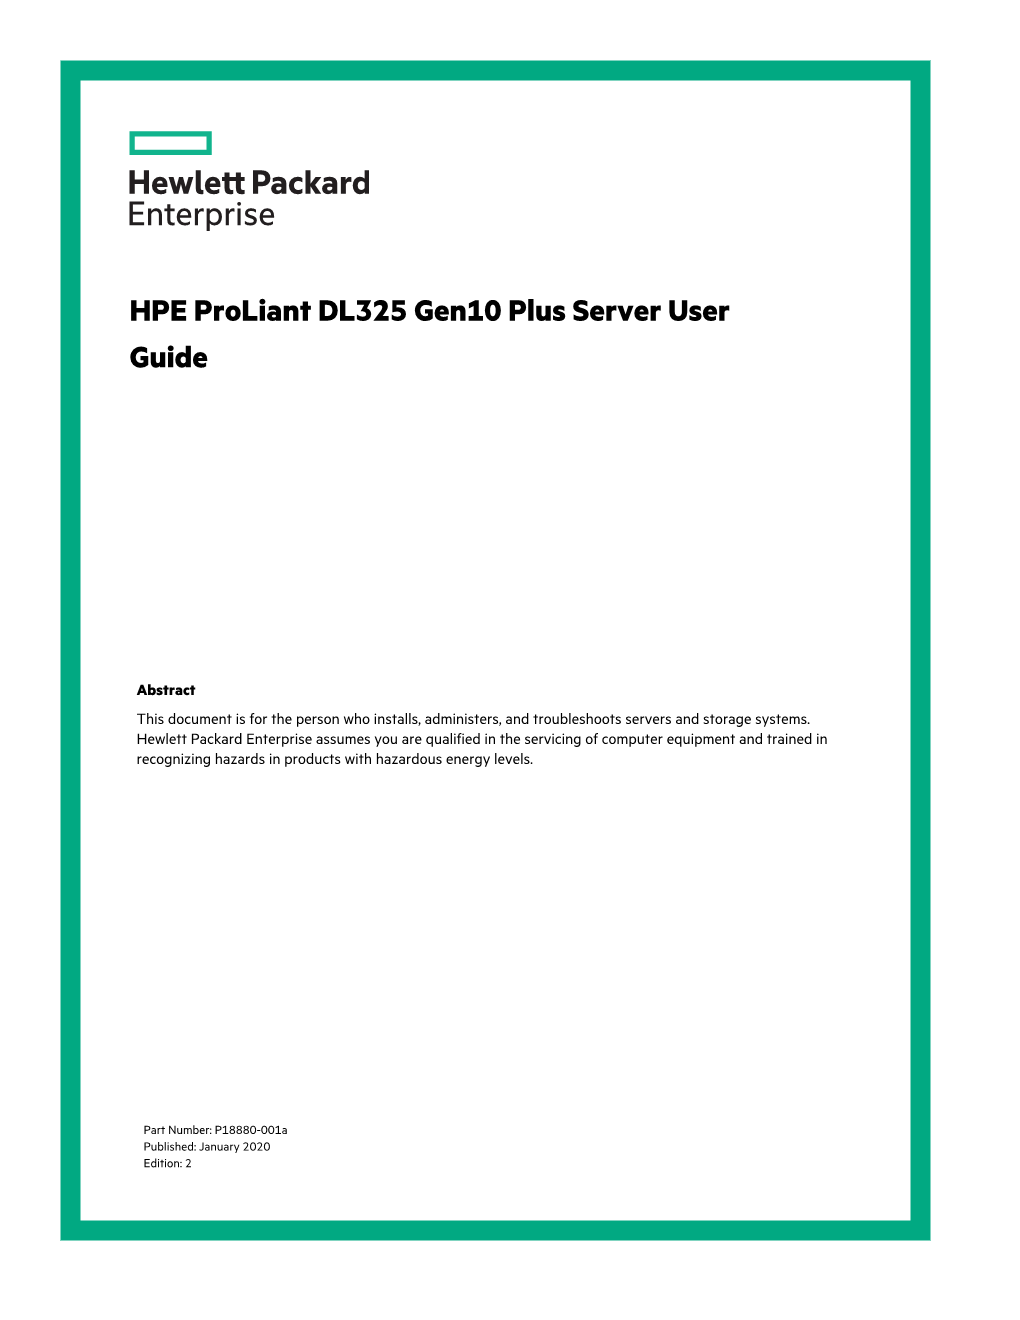 HPE Proliant DL325 Gen10 Plus Server User Guide